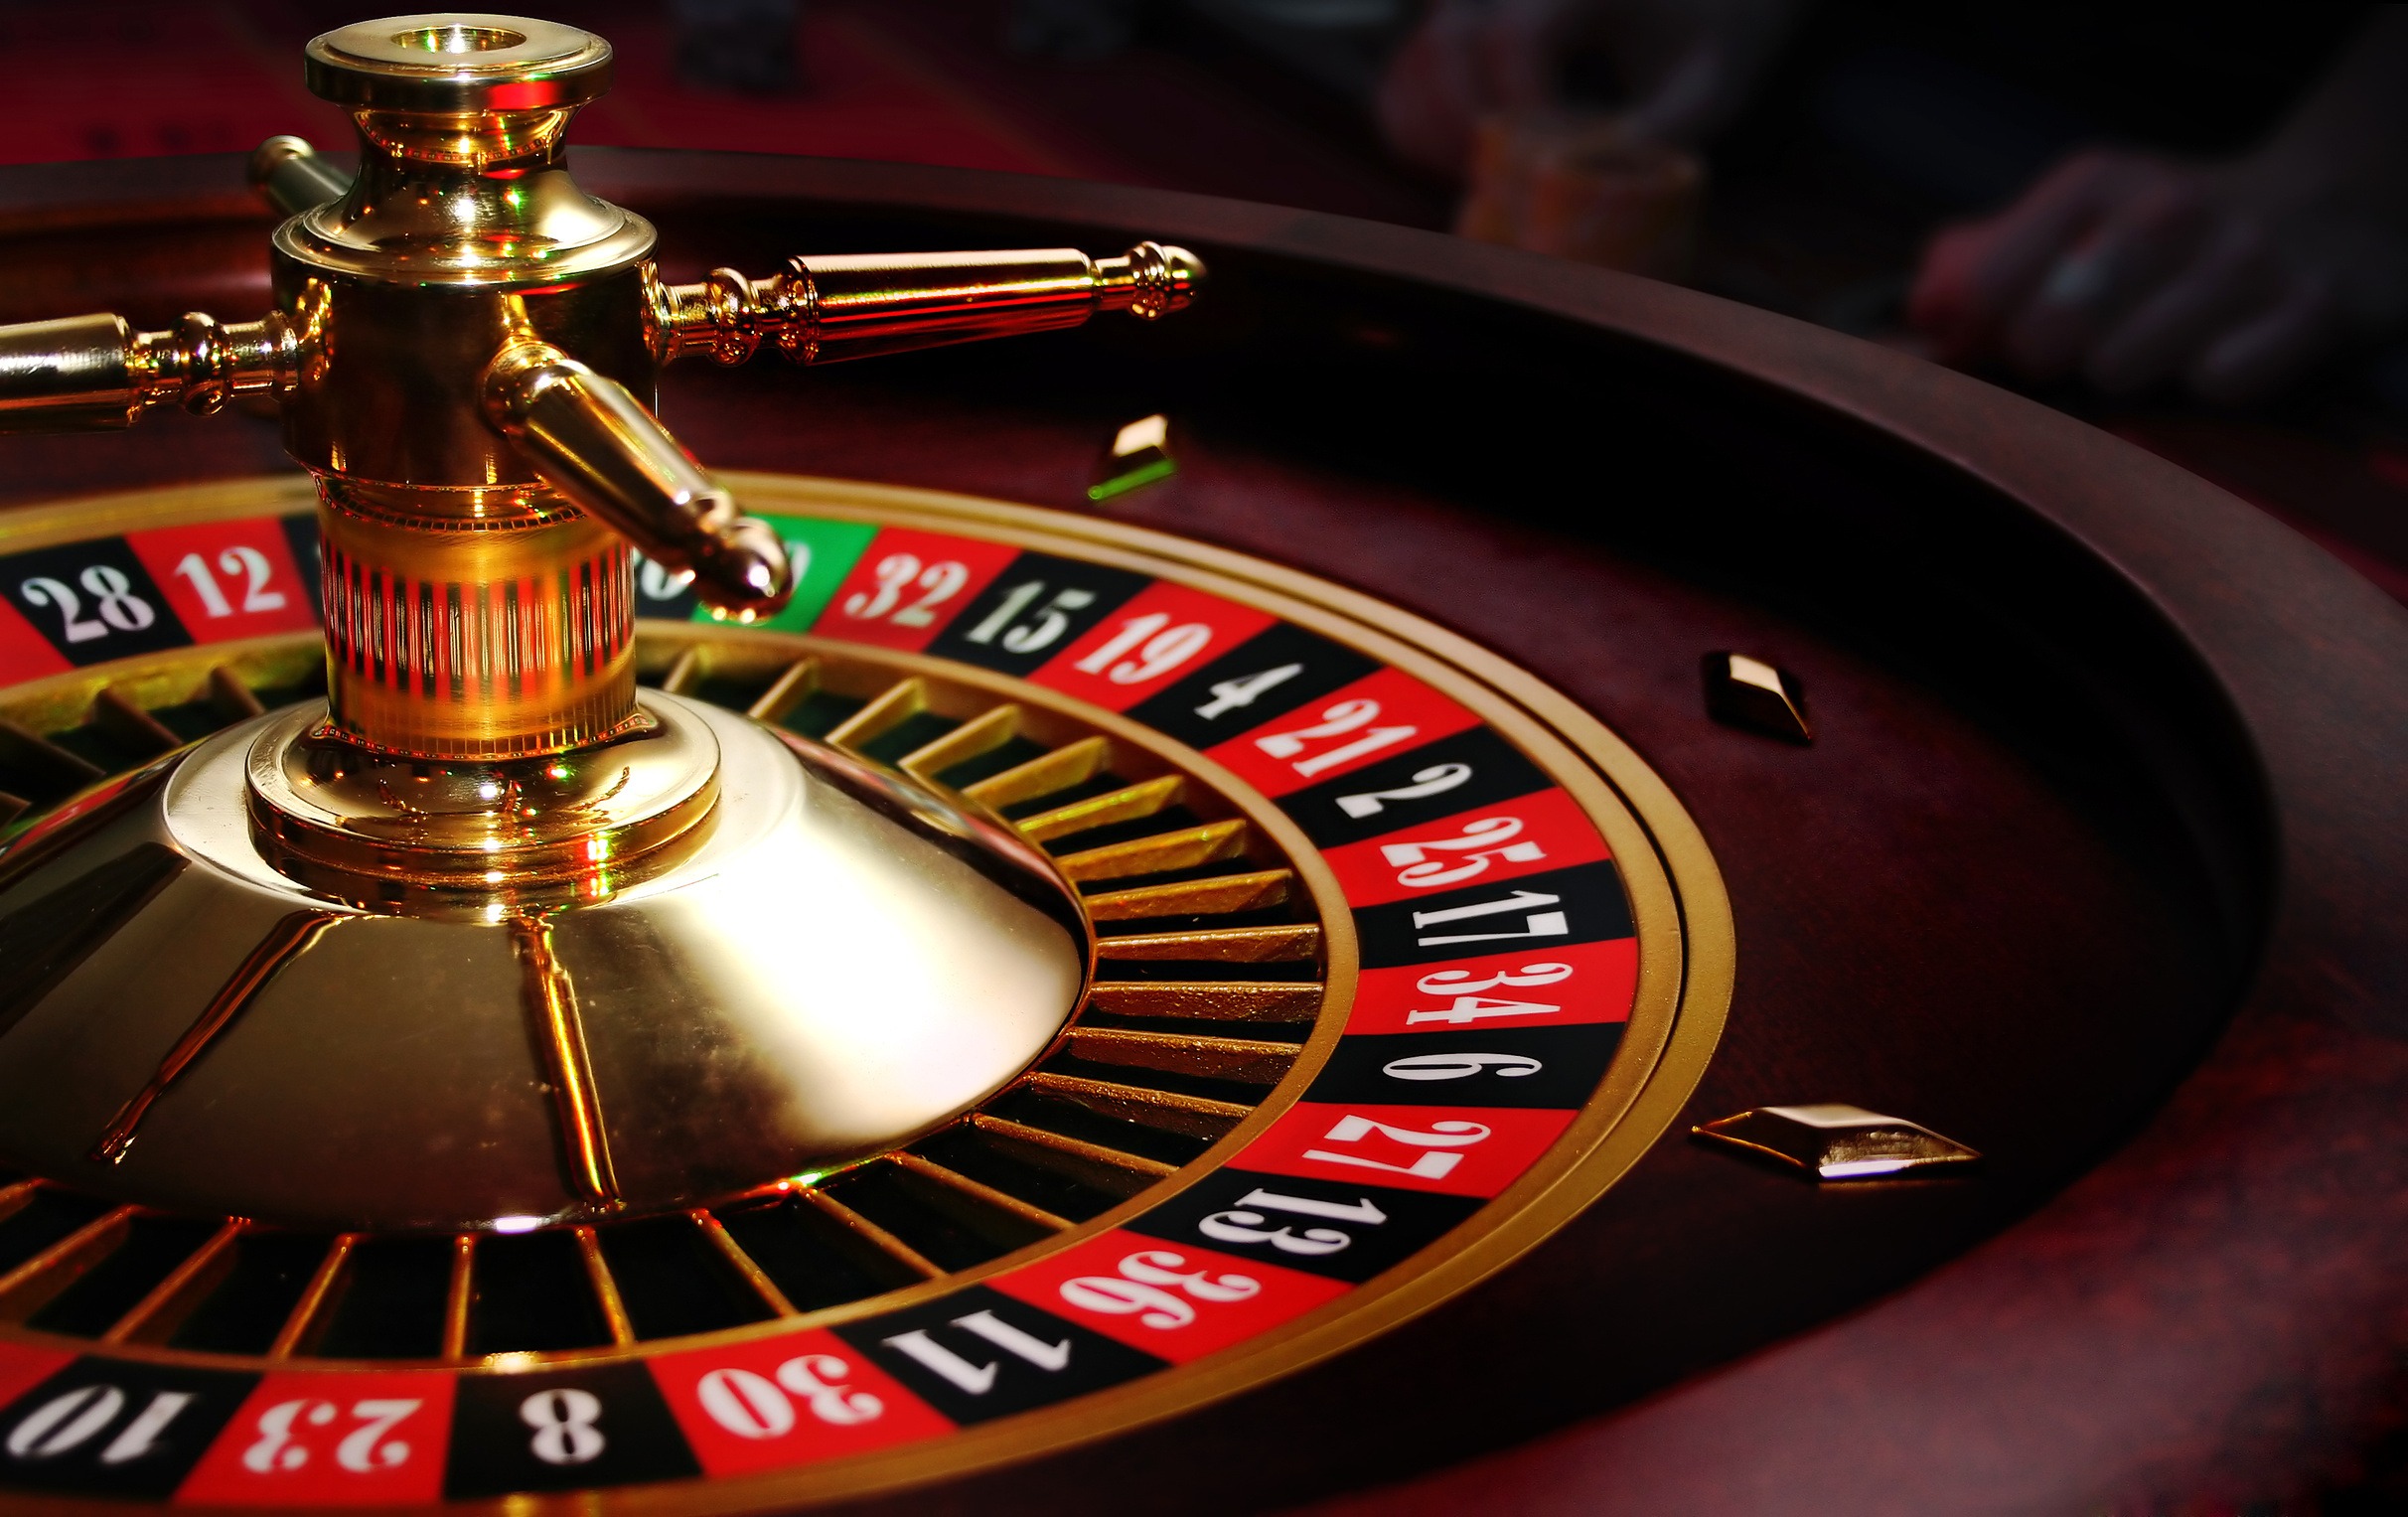 Roulette Wheel Casino Game NY, NYC, NJ, CT, Long Island